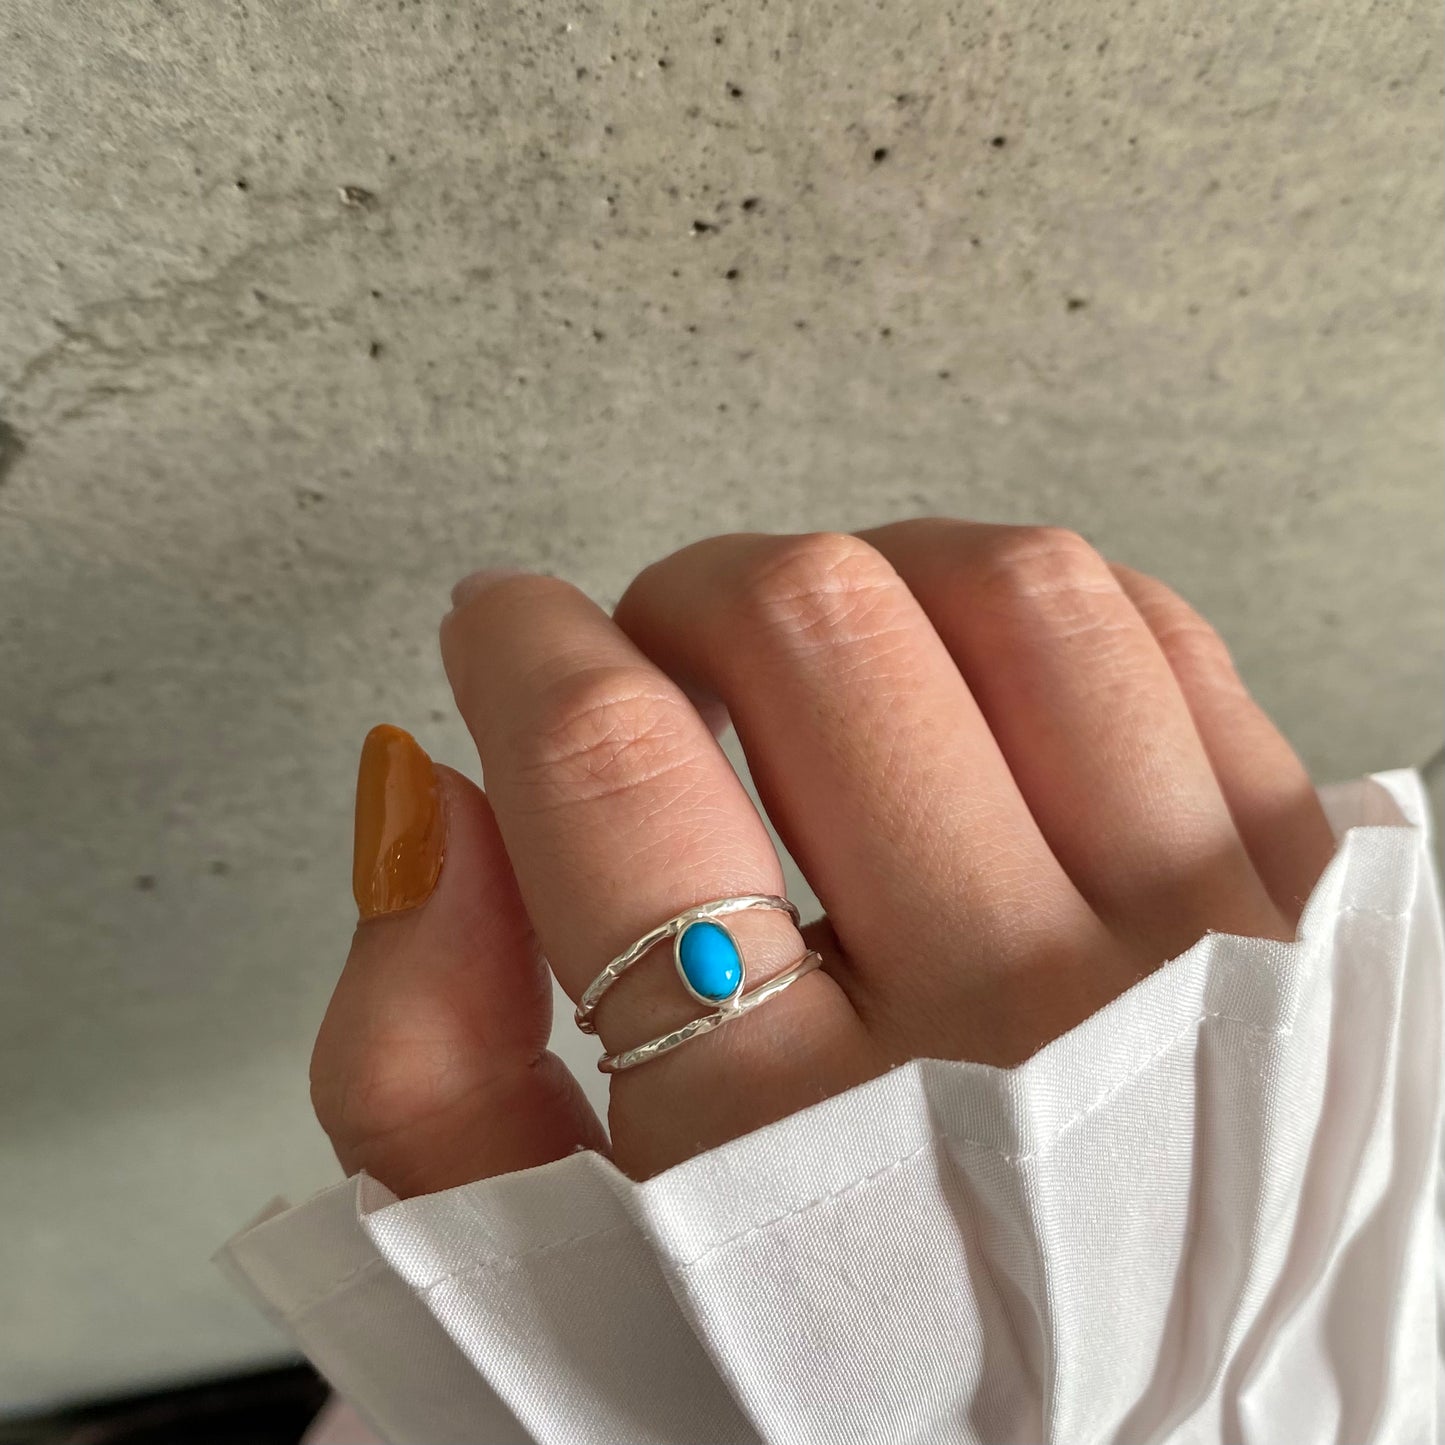 Turquoise design ring